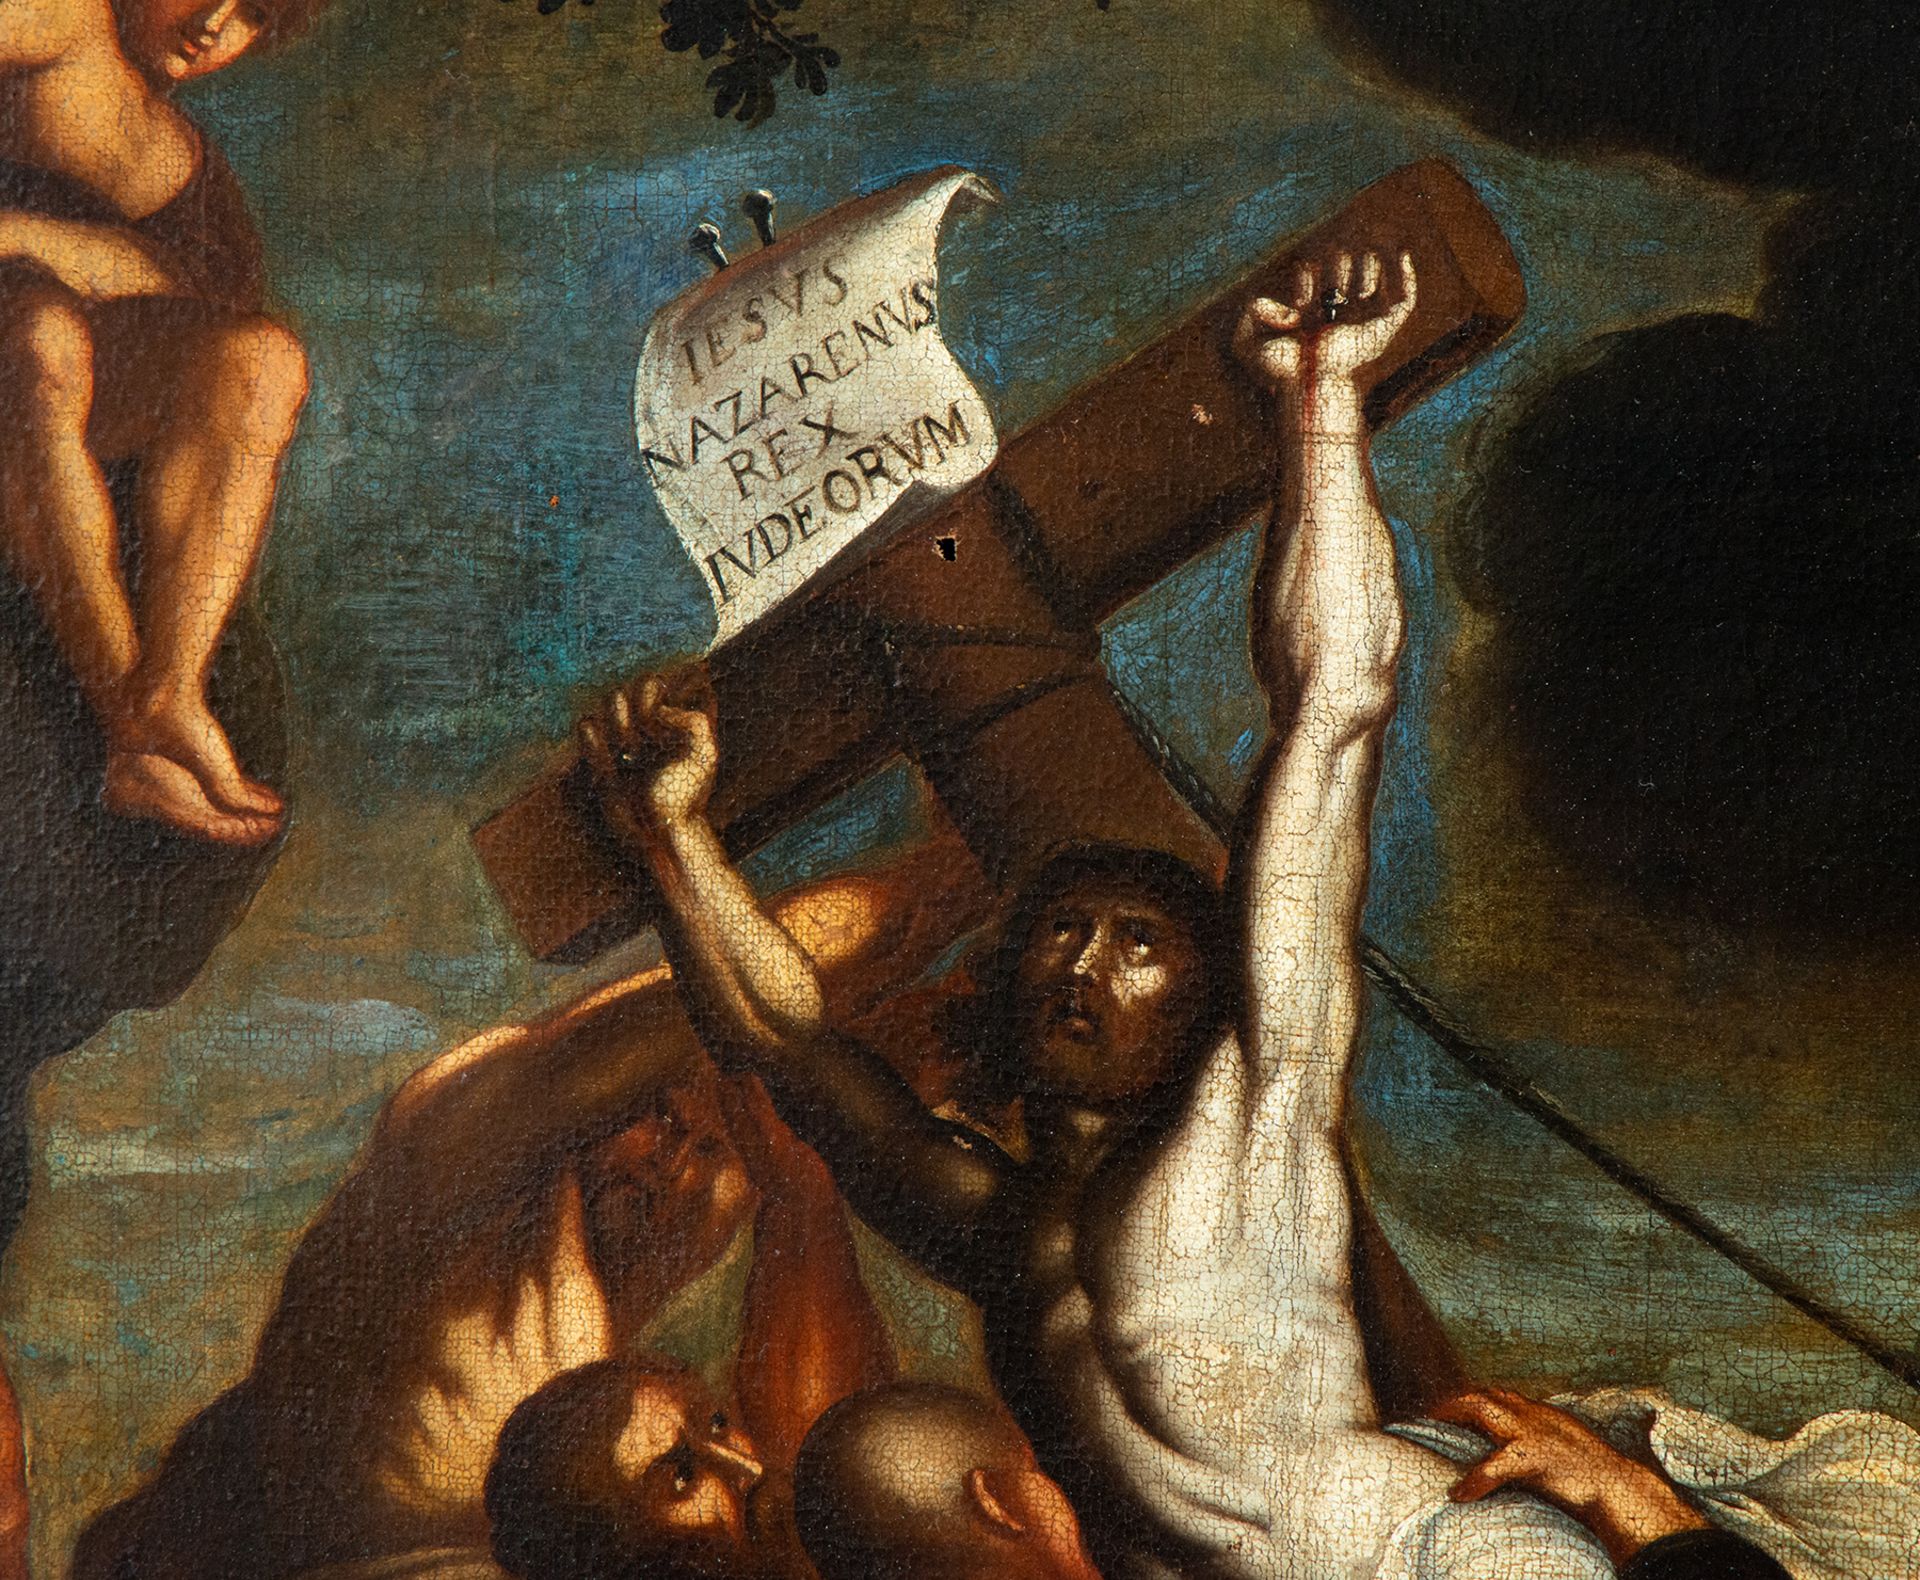 The Crucifixion of Christ, 17th century Italian school - Image 3 of 7